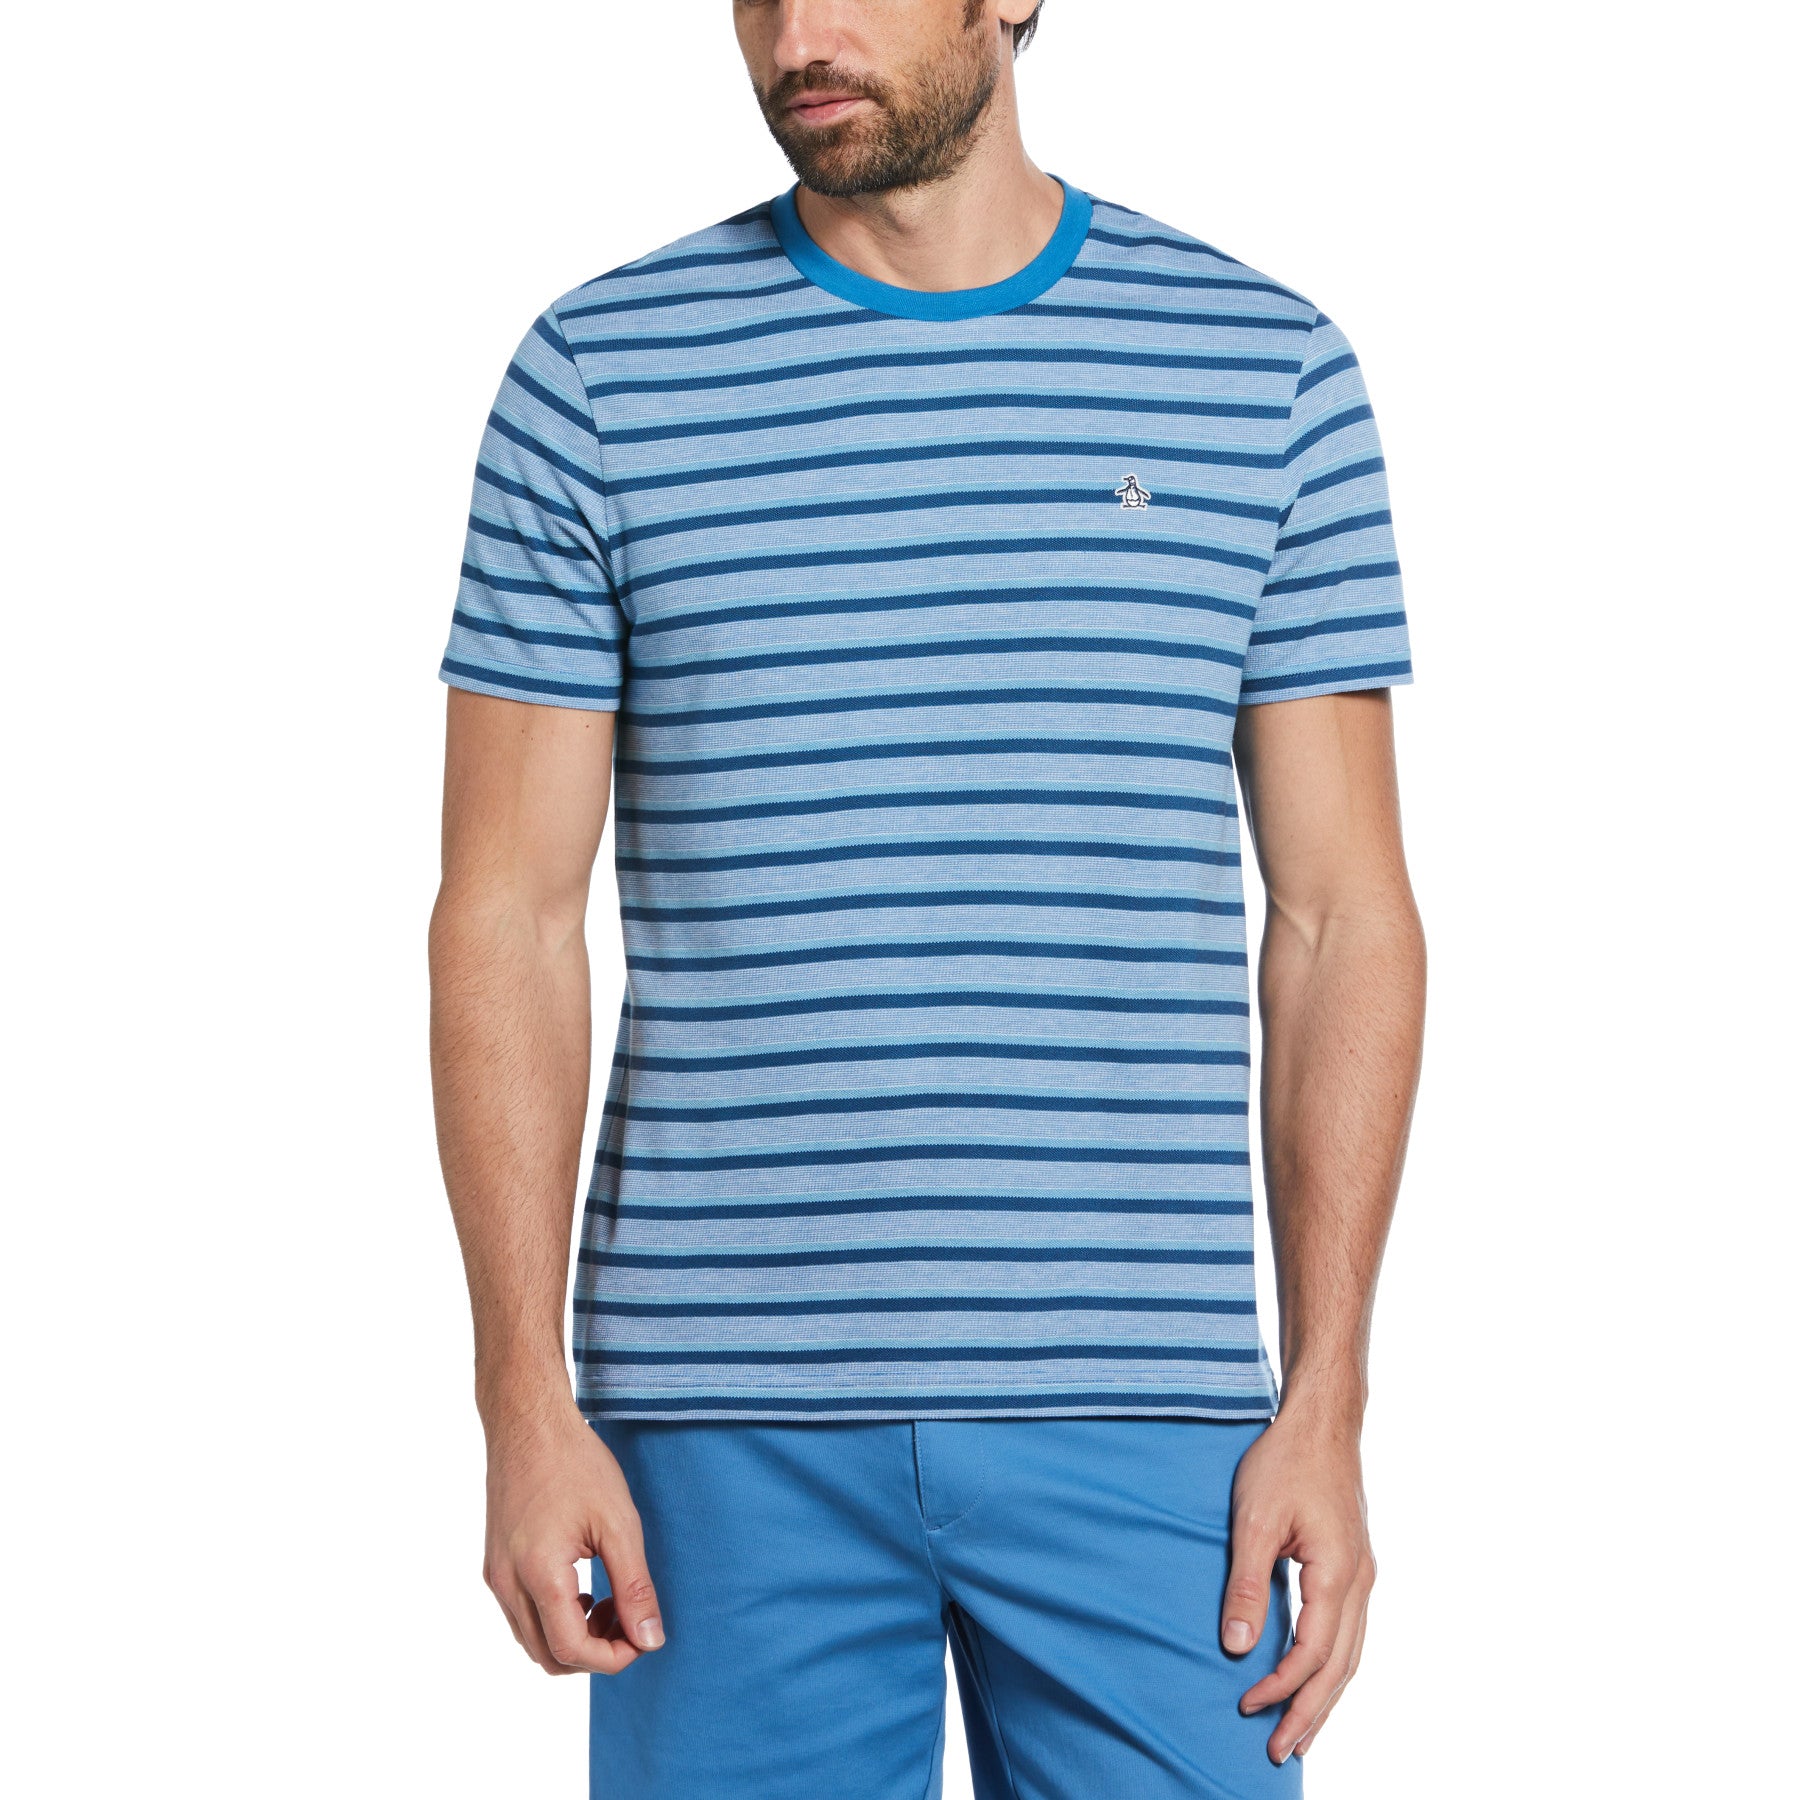 View Embroidered Striped TShirt In Vallarta Blue information